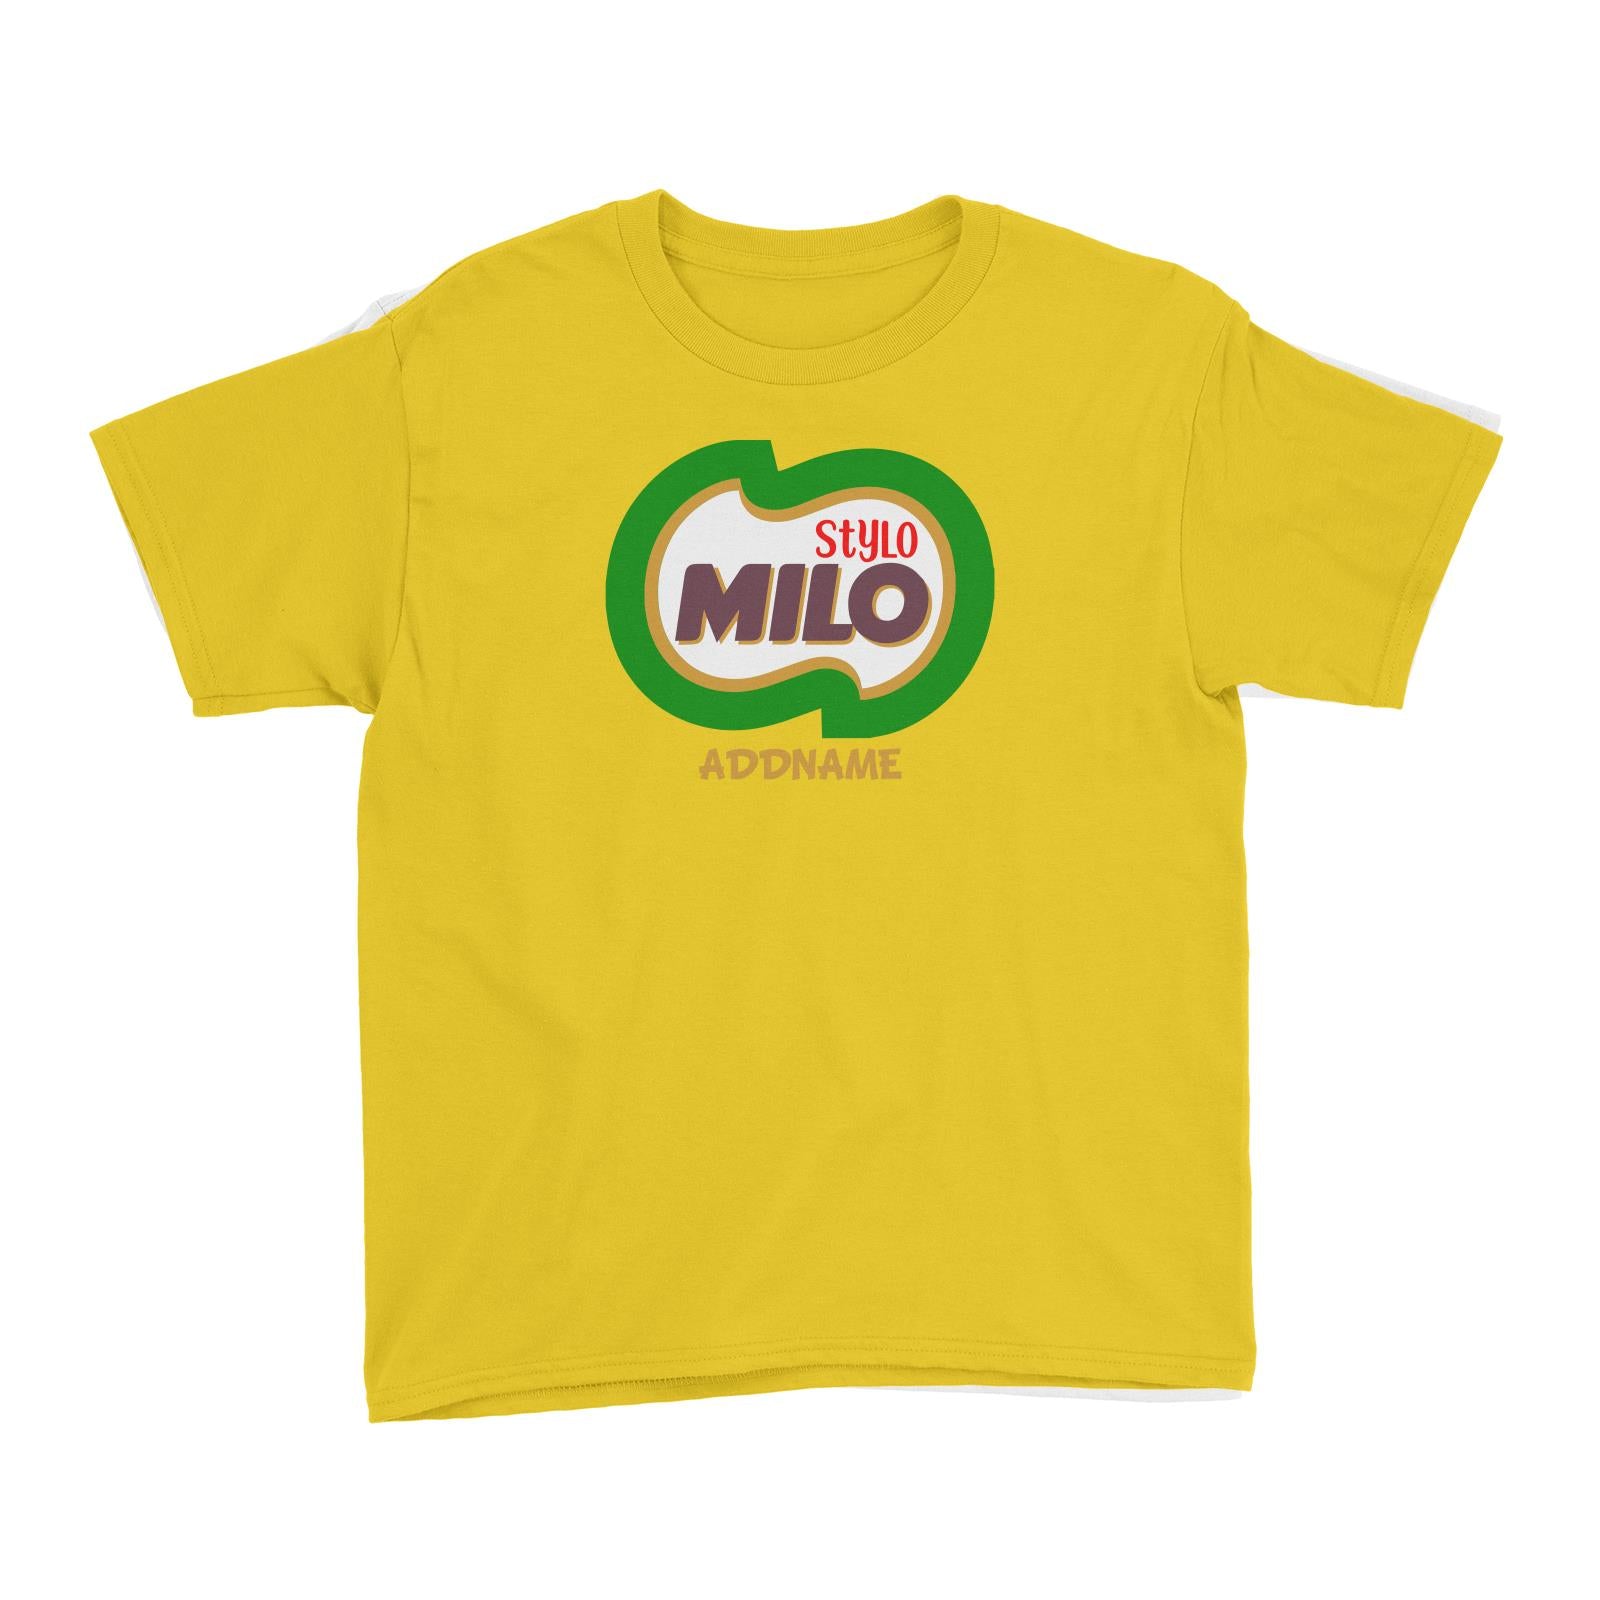 Stylo Milo Kid's T-Shirt